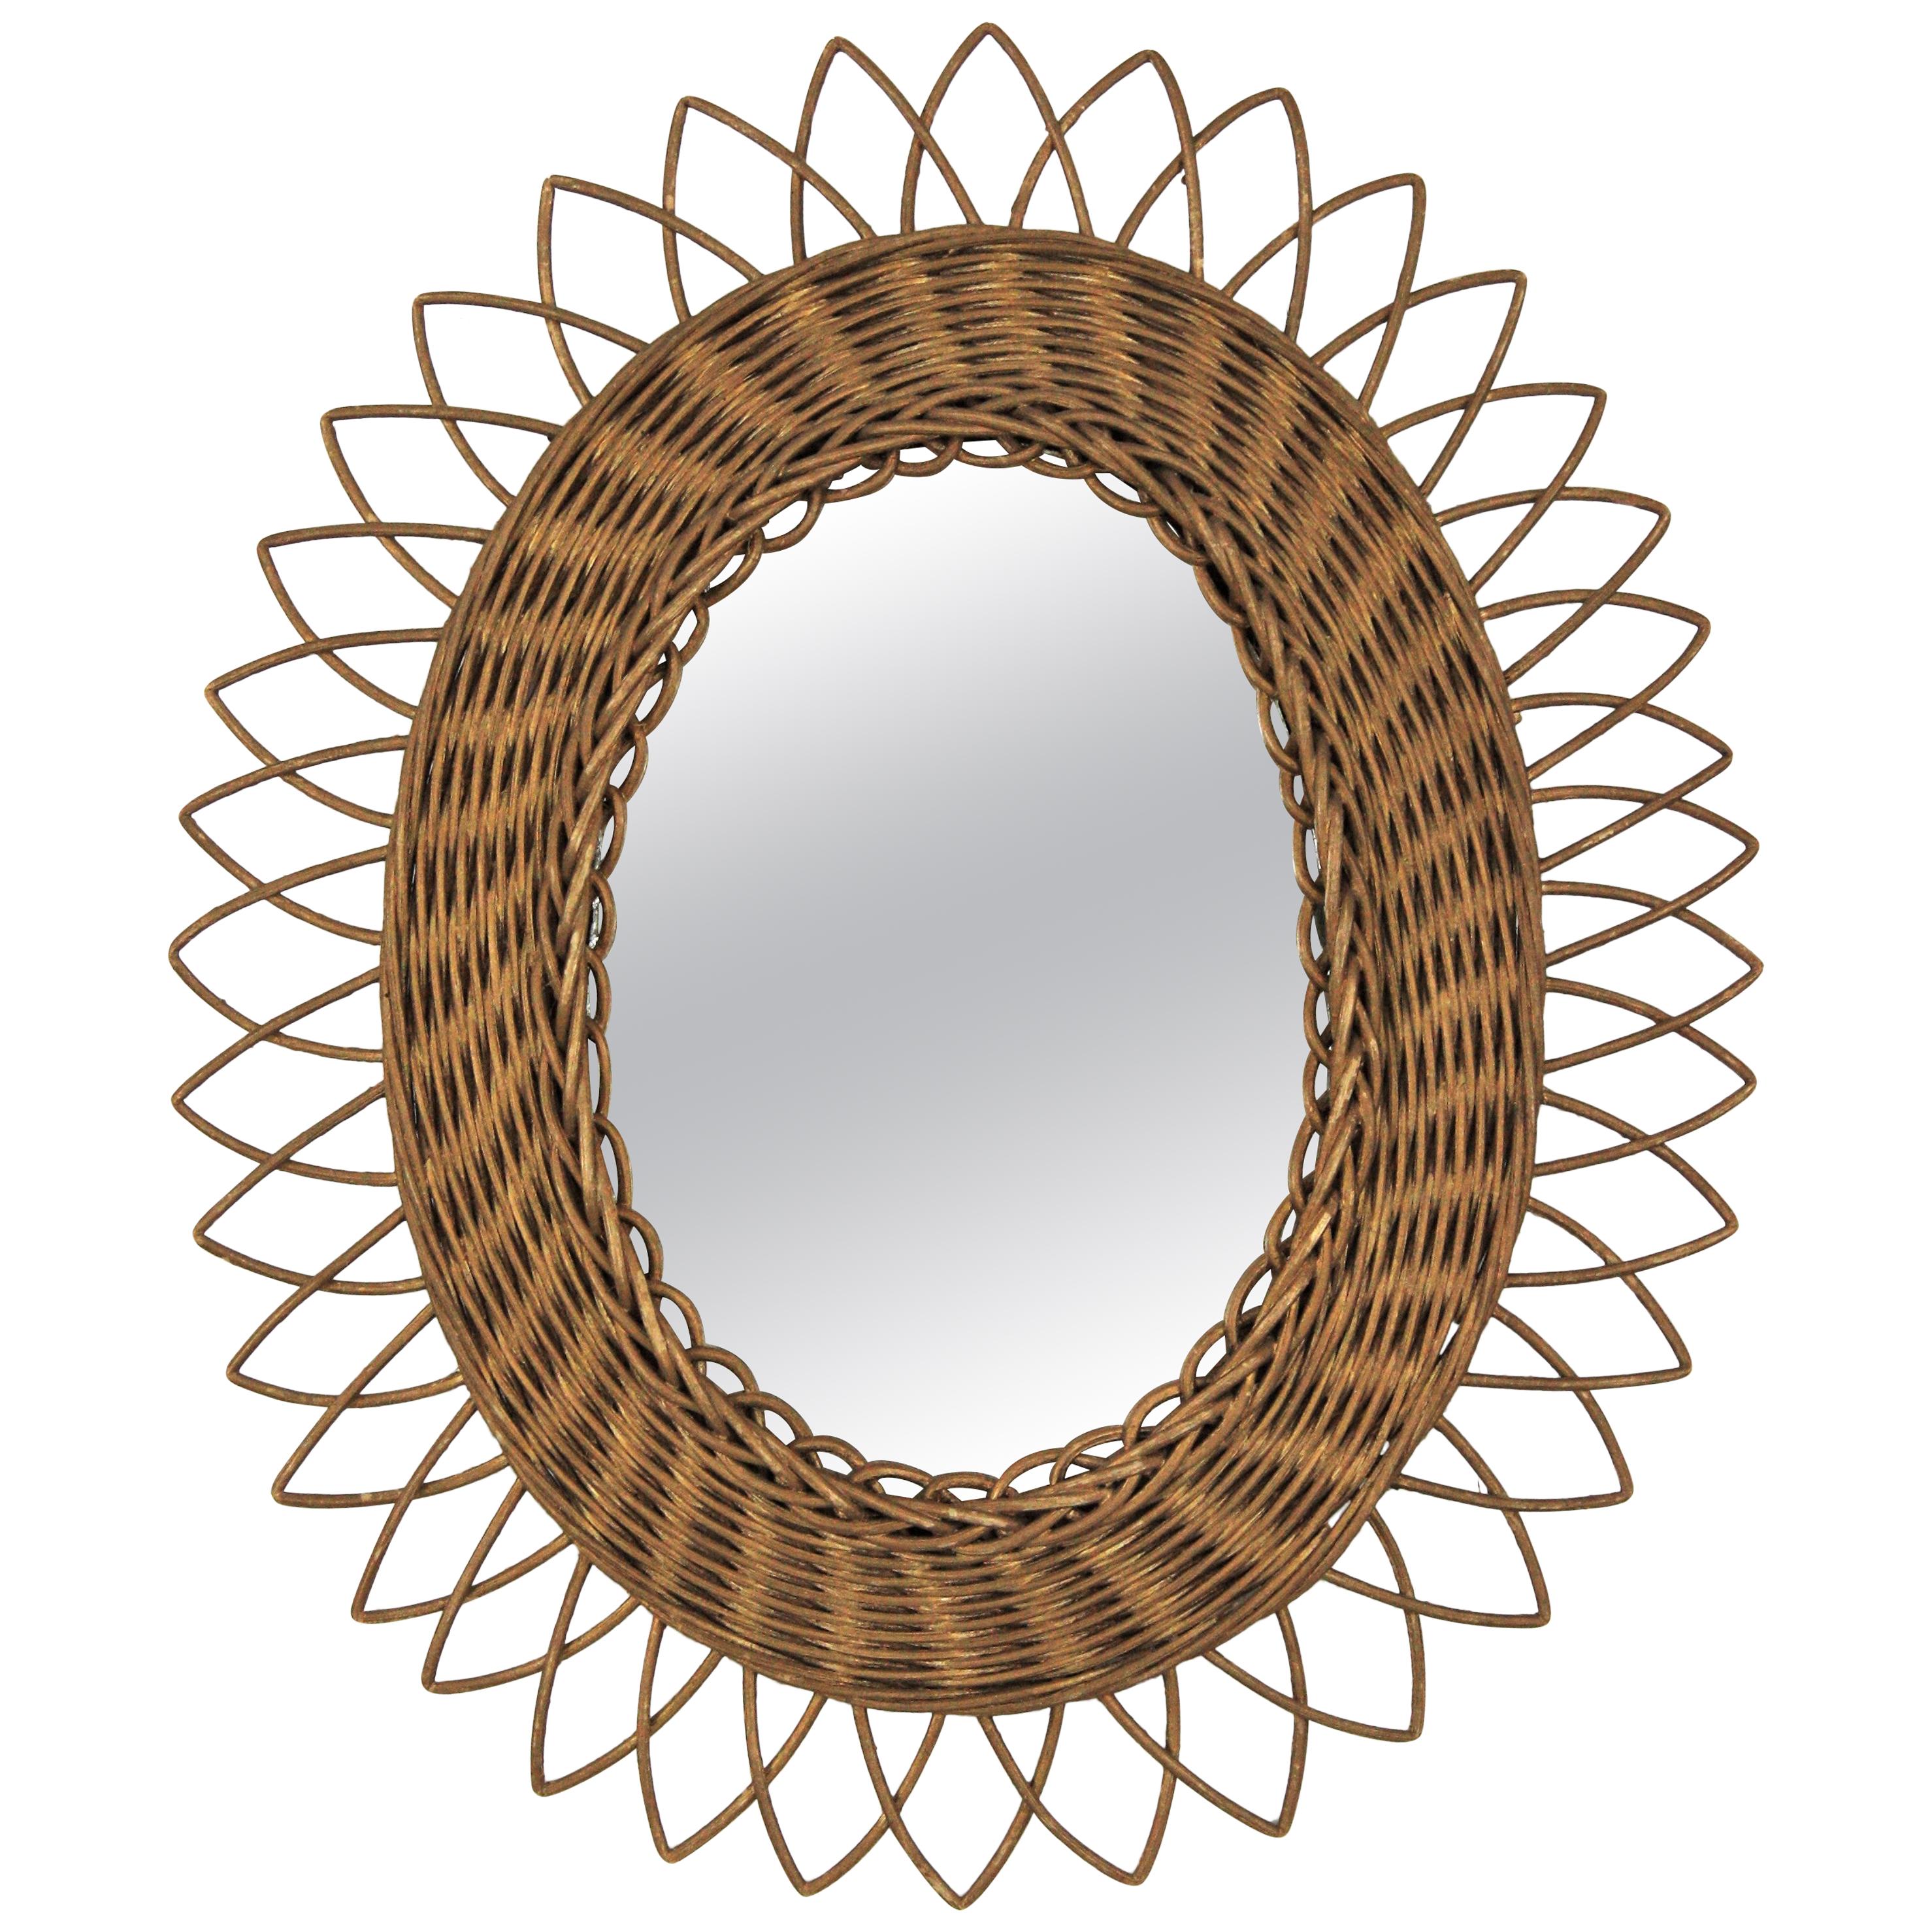 Rattan Oval Sunburst Mirror with Gold Paint